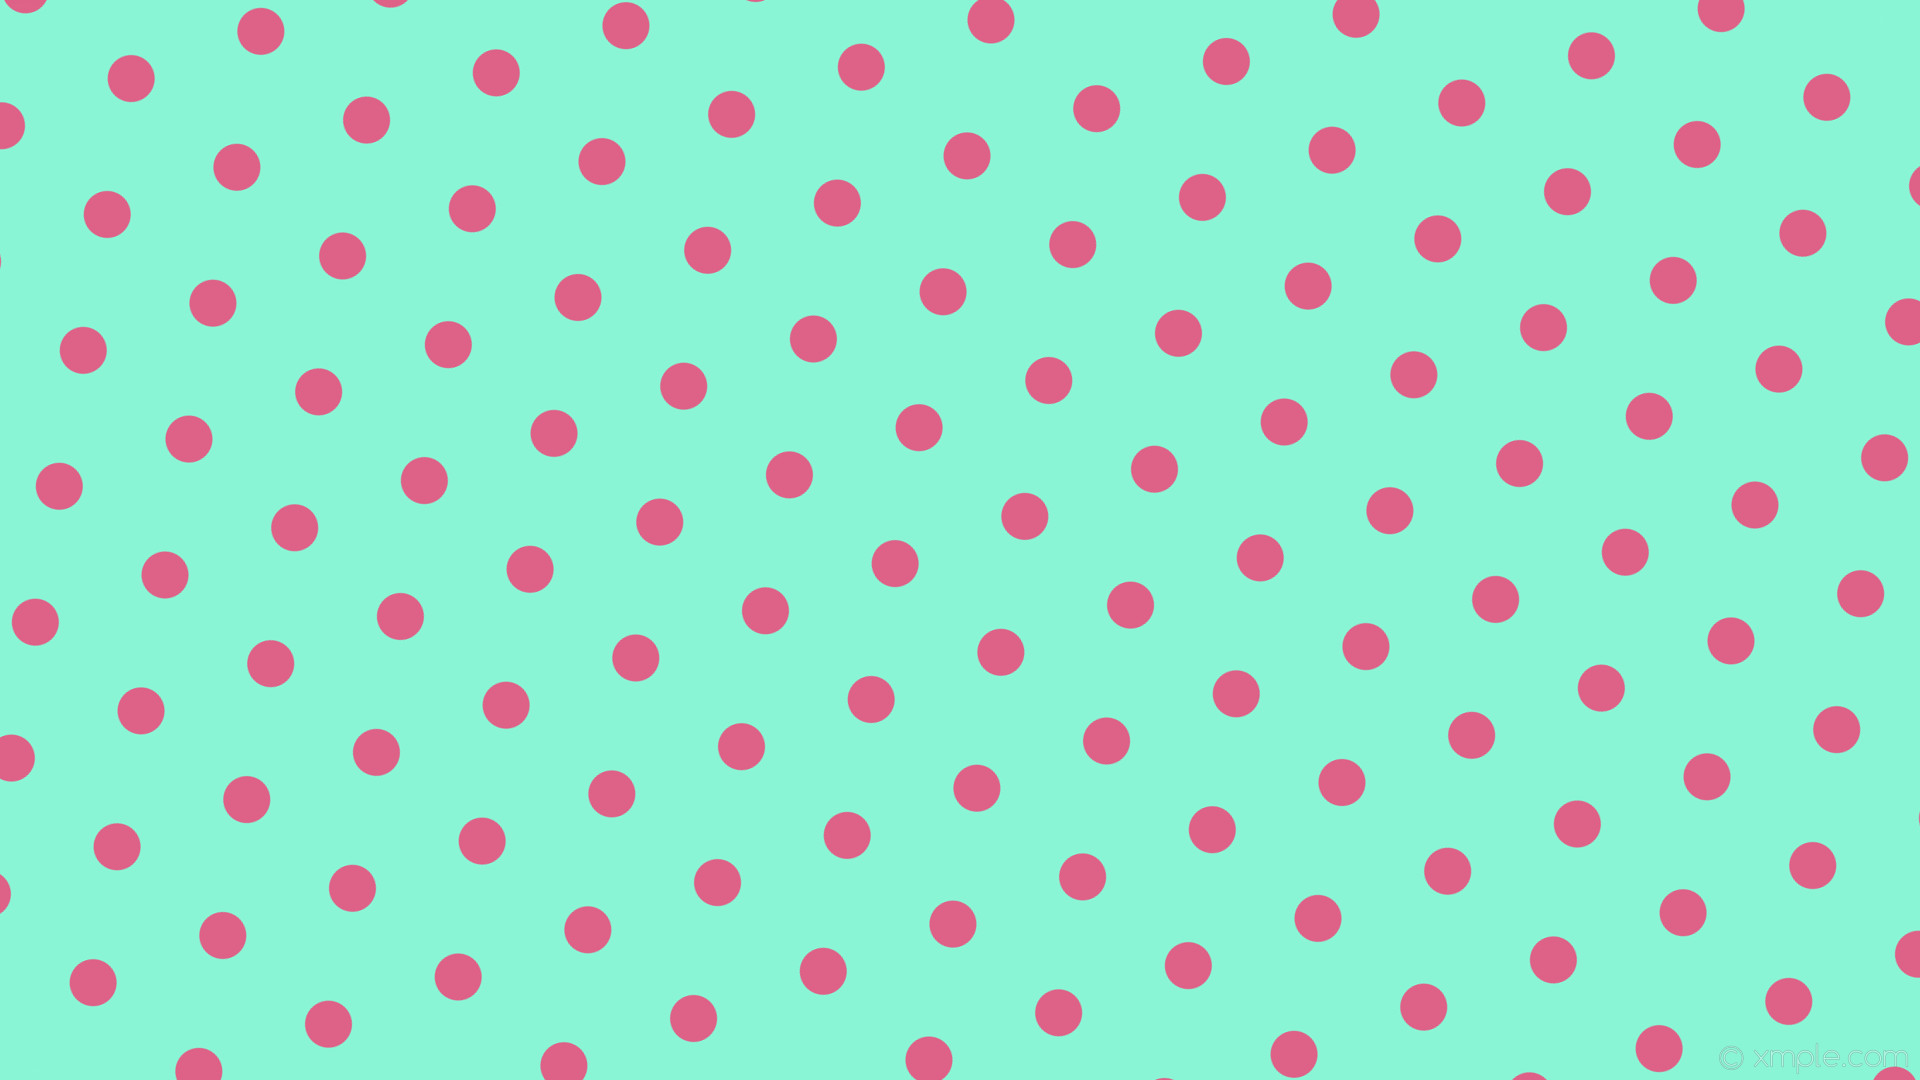 1920x1080 wallpaper polka dots turquoise pink hexagon #8af5d5 #de6288 diagonal 20Â°  47px 138px